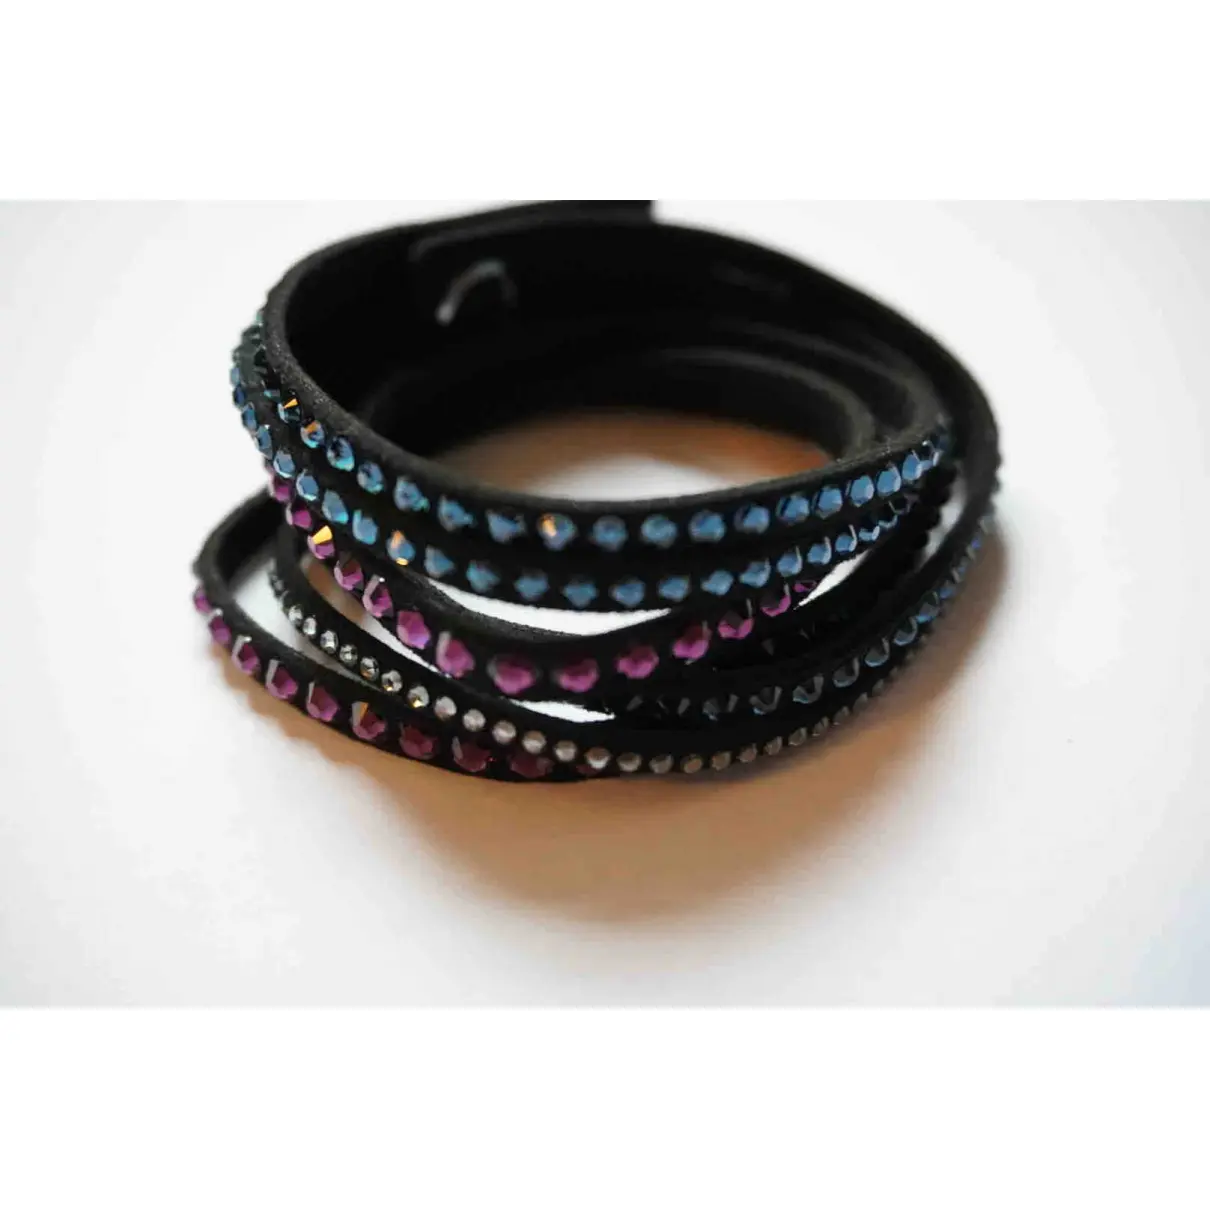 Buy Swarovski Slake leather bracelet online